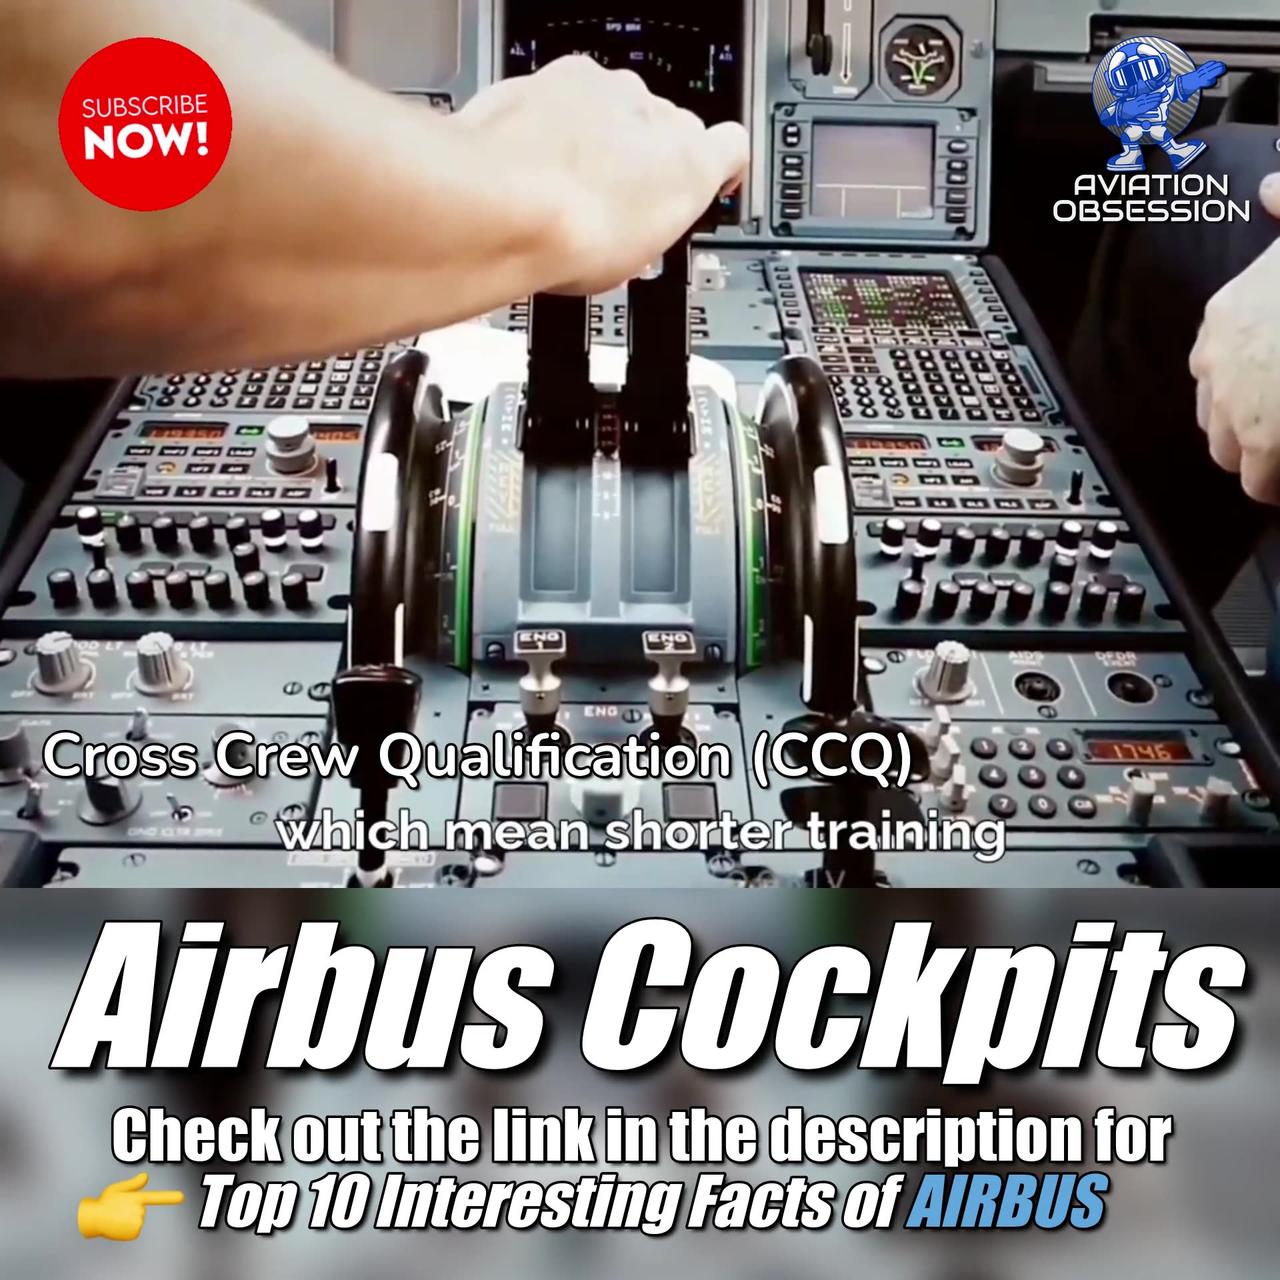 Airbus's Fleet Same Cockpit Design